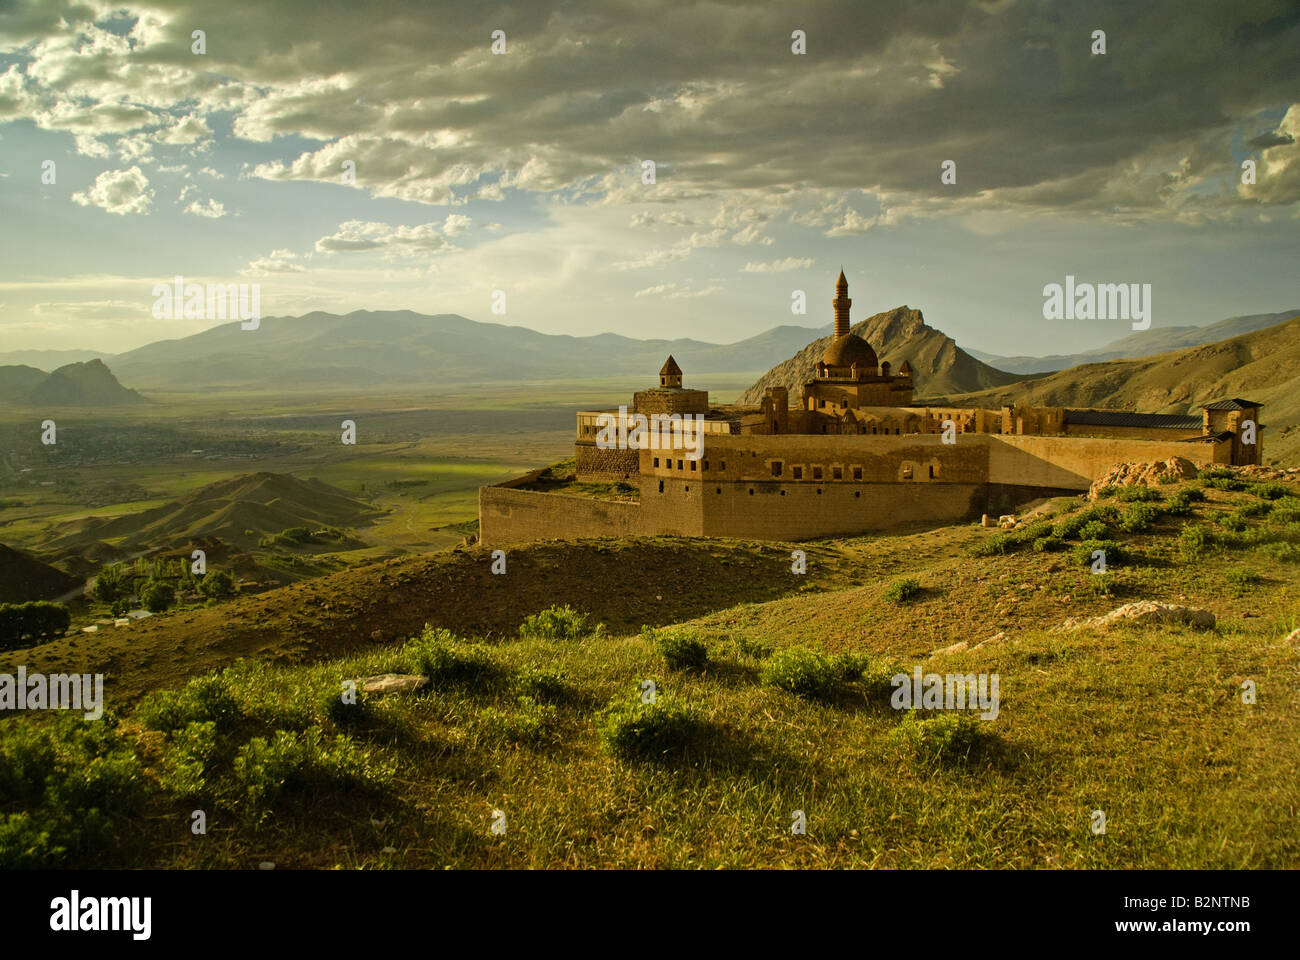 Ishak Pasa Saray, palazzo fortificato, in montagne vicino Dogubeyazit Foto Stock